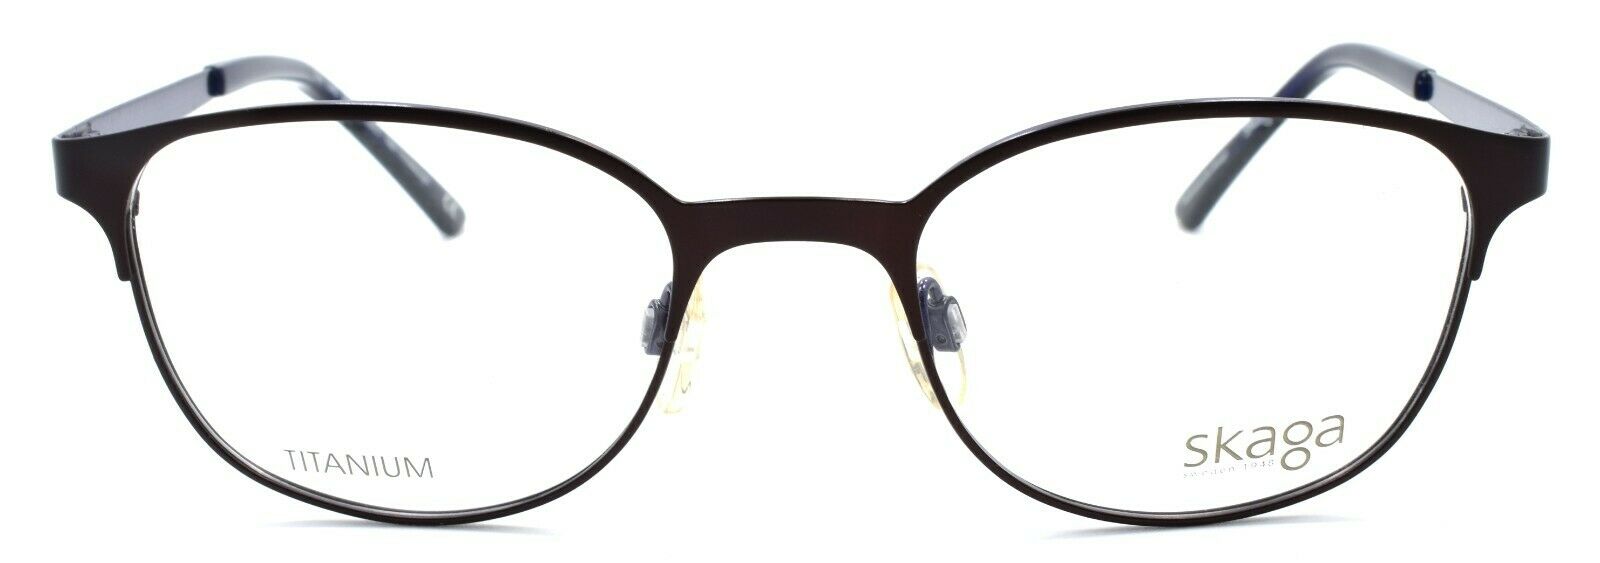 2-Skaga 3748 Timo 5201 Men's Eyeglasses Frames TITANIUM 50-20-140 Brown-IKSpecs